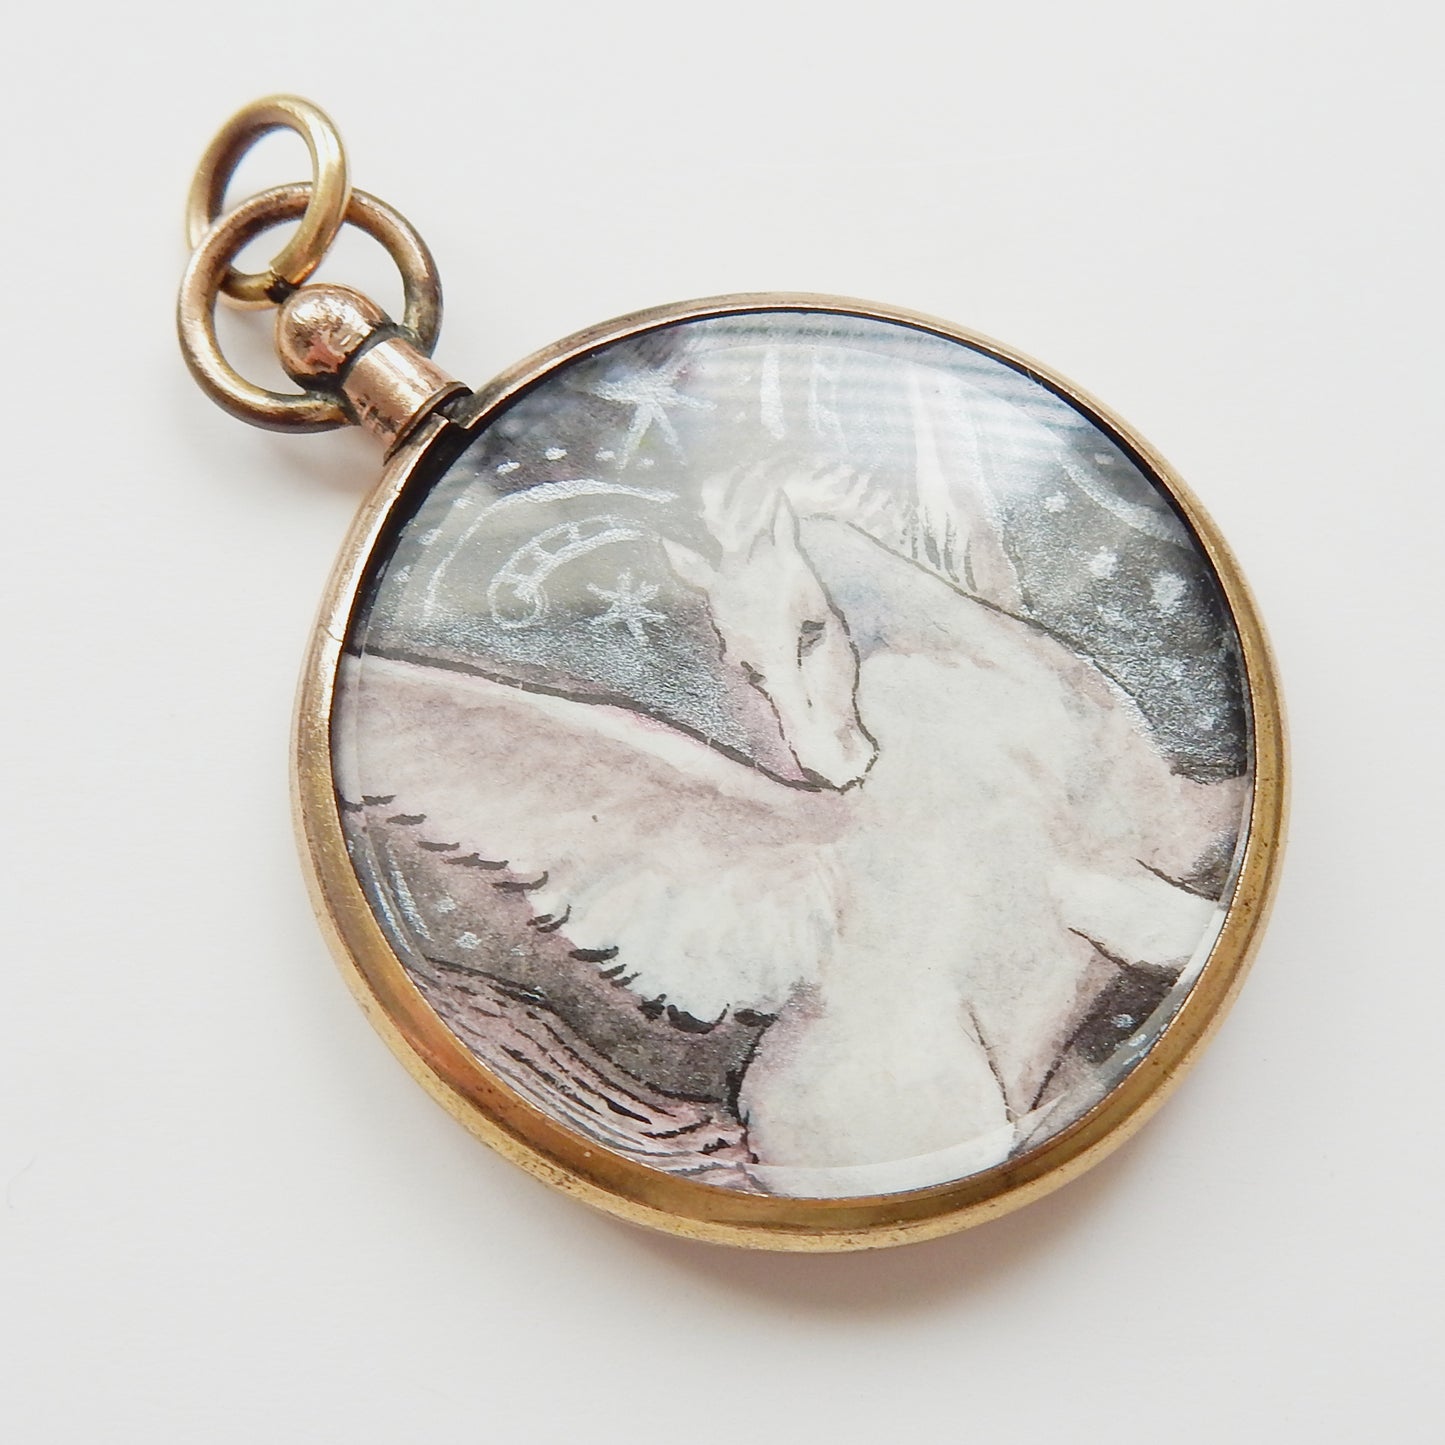 "Silver Dream" Antique Locket depicting Painted Portrait of Pegasus